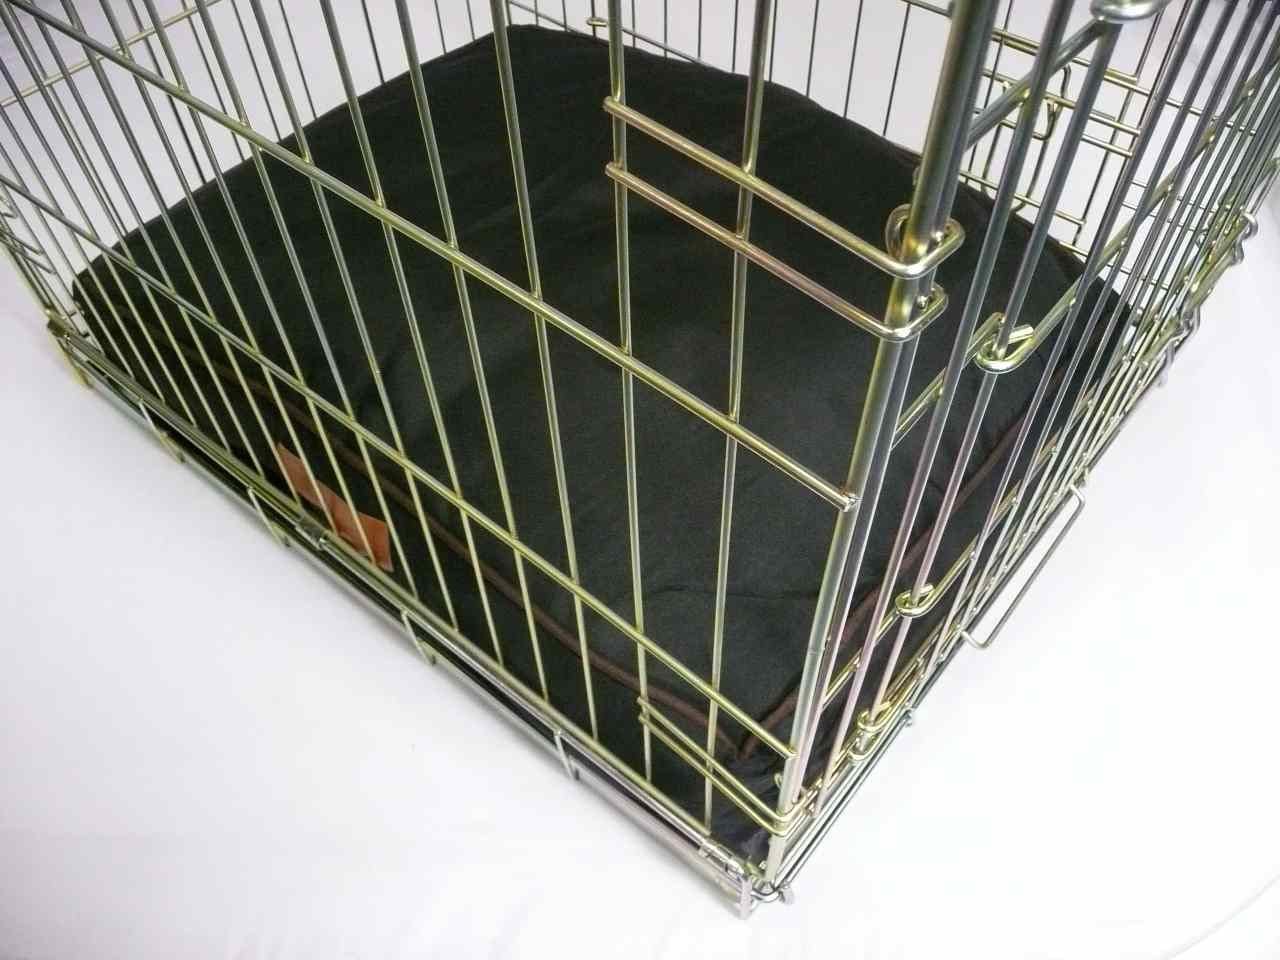  Ellie-Bo Cama para perro grande de 87 cm x 57 cm, resistente al agua, se ajusta a la jaula o caja de perro 91 cm 